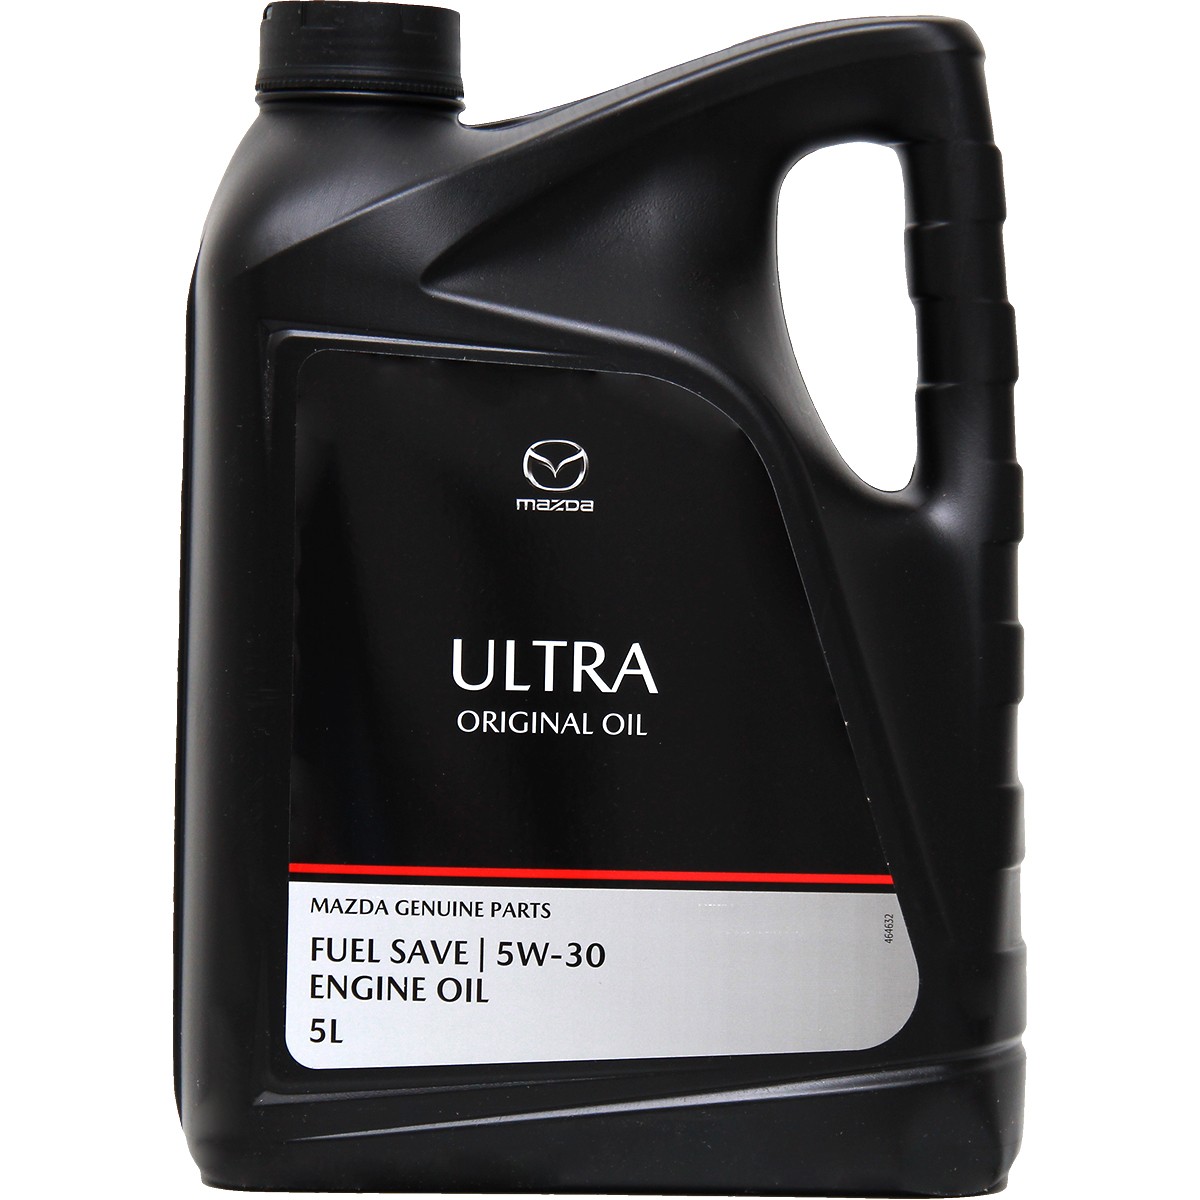 Kaufen Sie Auto Öl MAZDA 183666 ULTRA, Fuel Save 5W-30, 5l